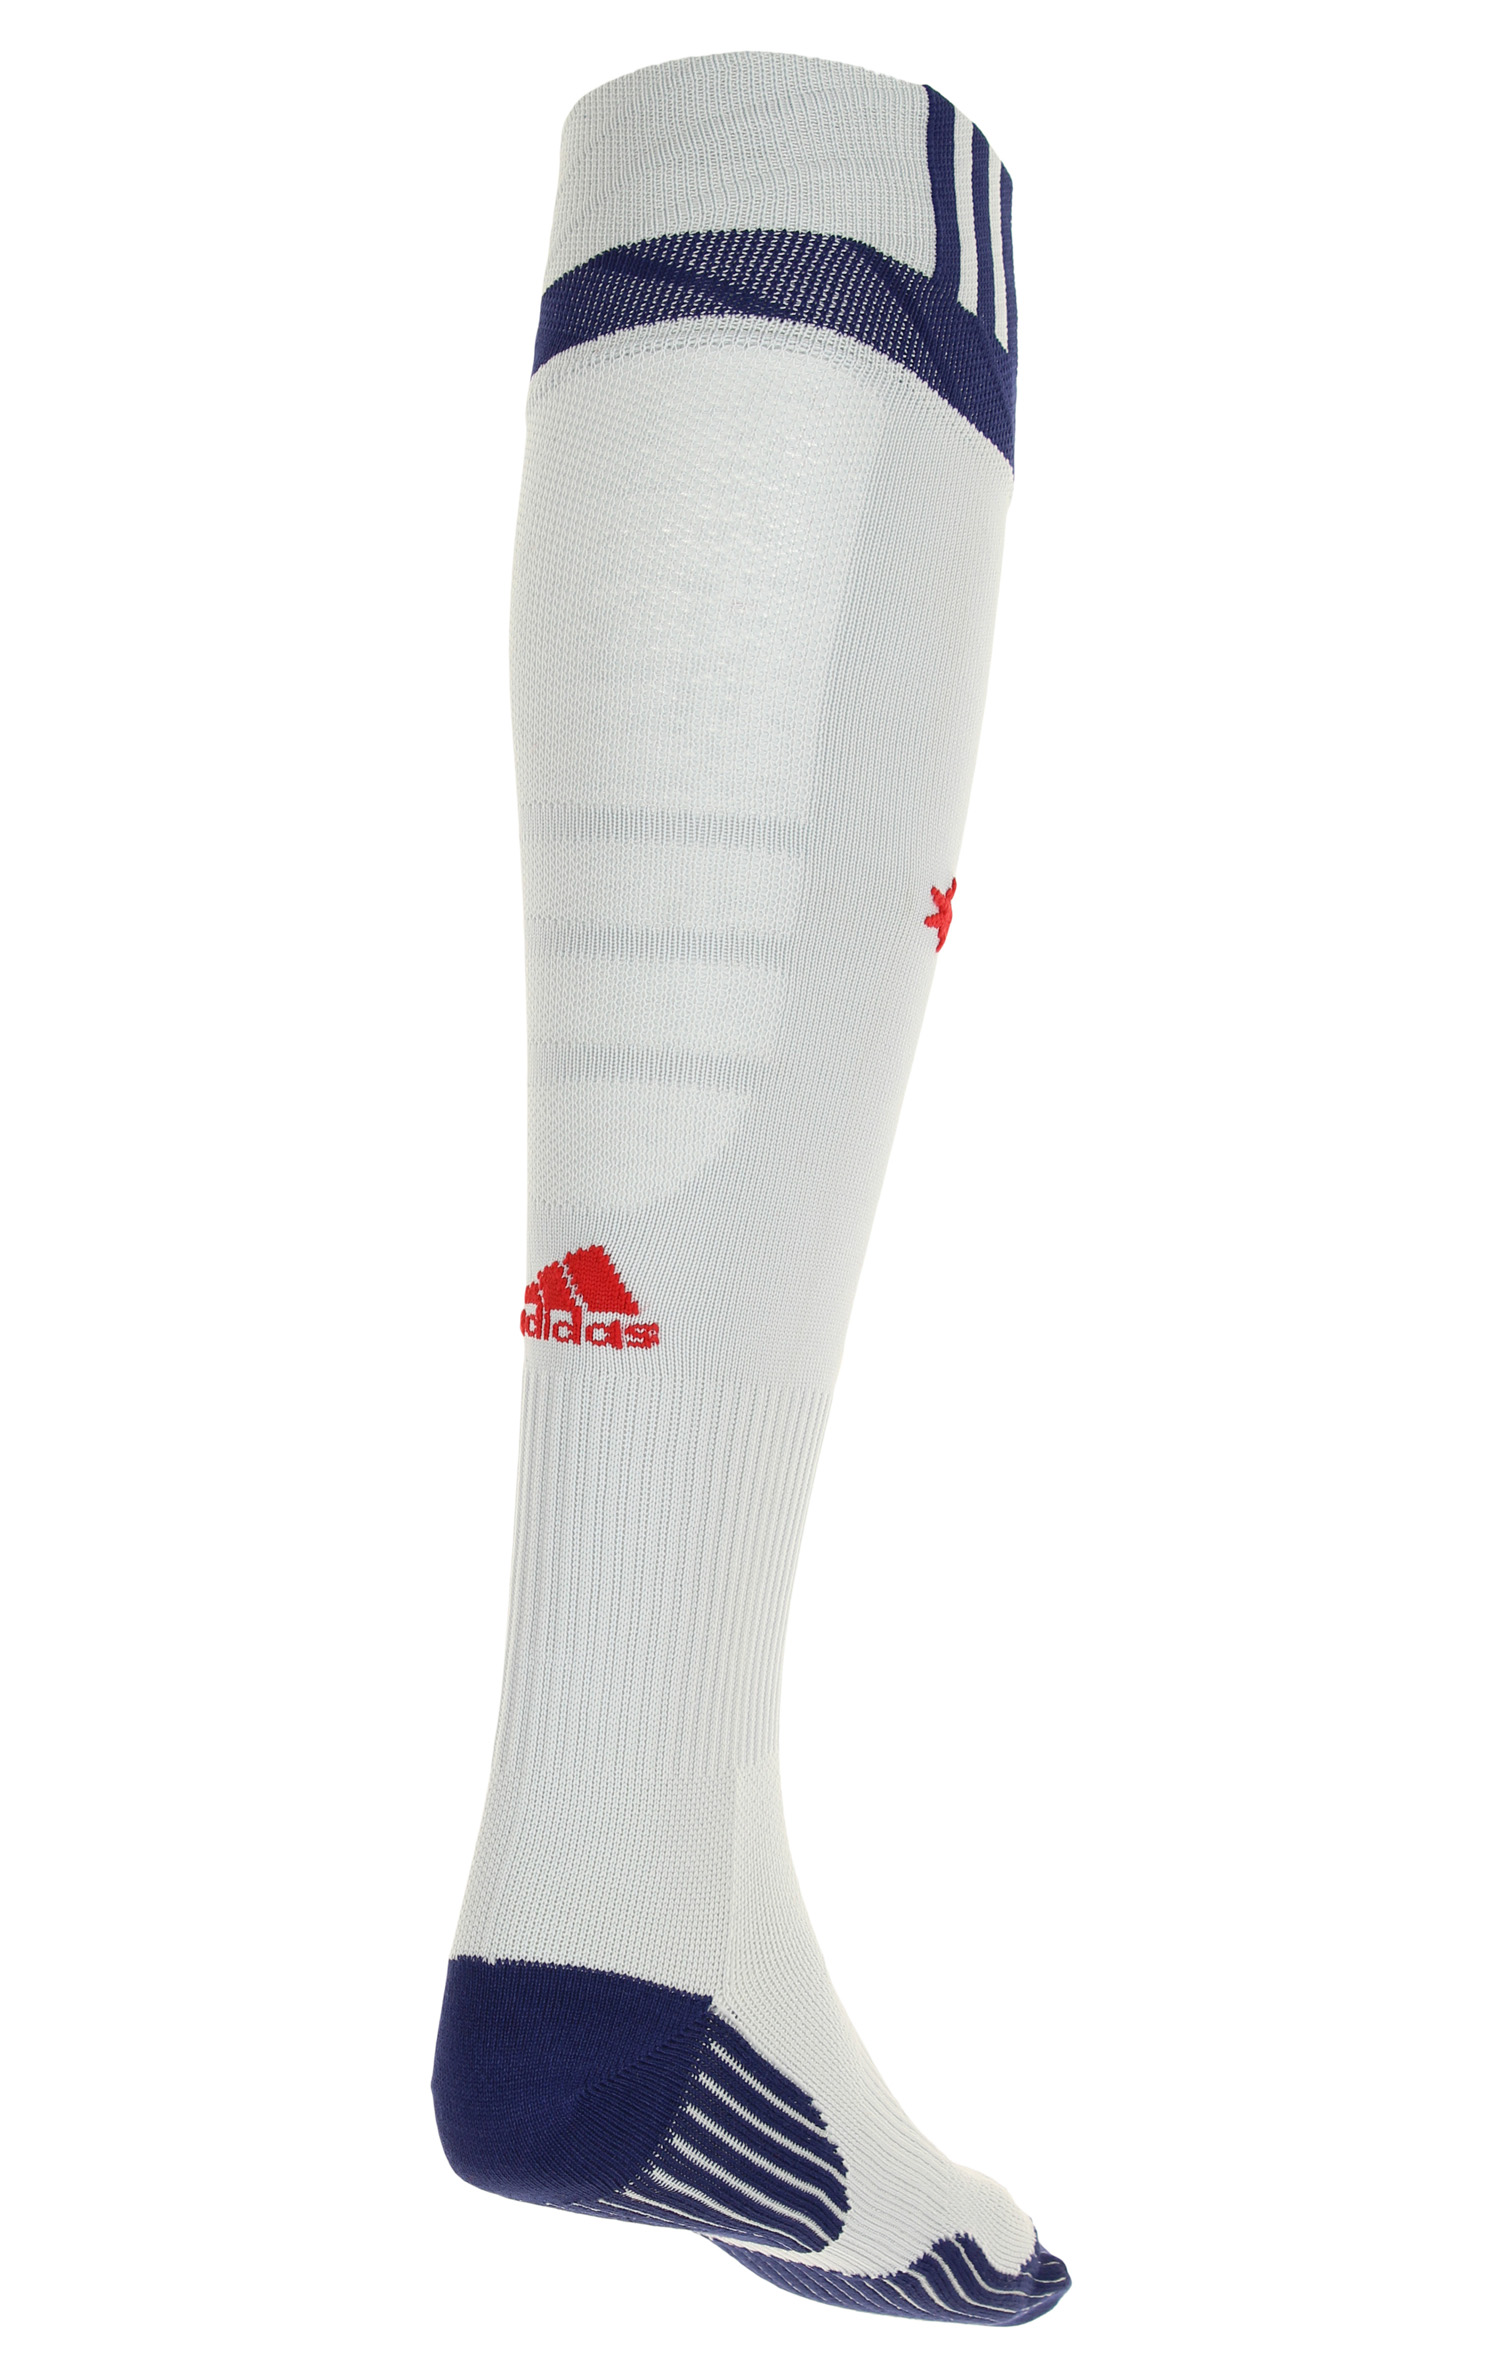 Adidas Traxion Premier Over the Calf Soccer Socks, Grey/Navy | eBay